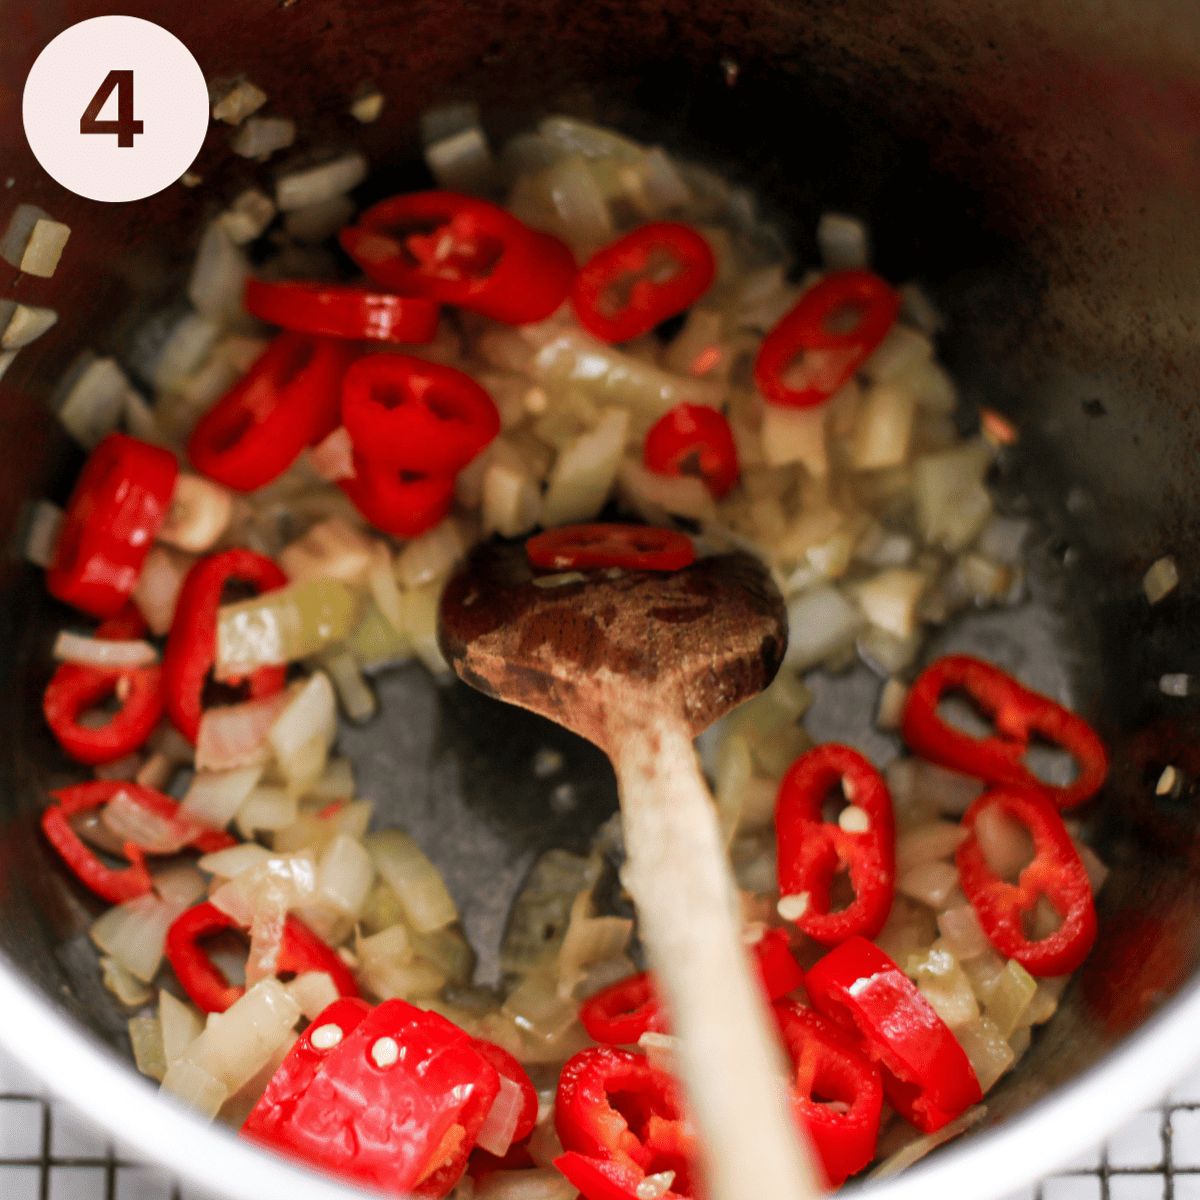 Adding chillis to aubergine chili.